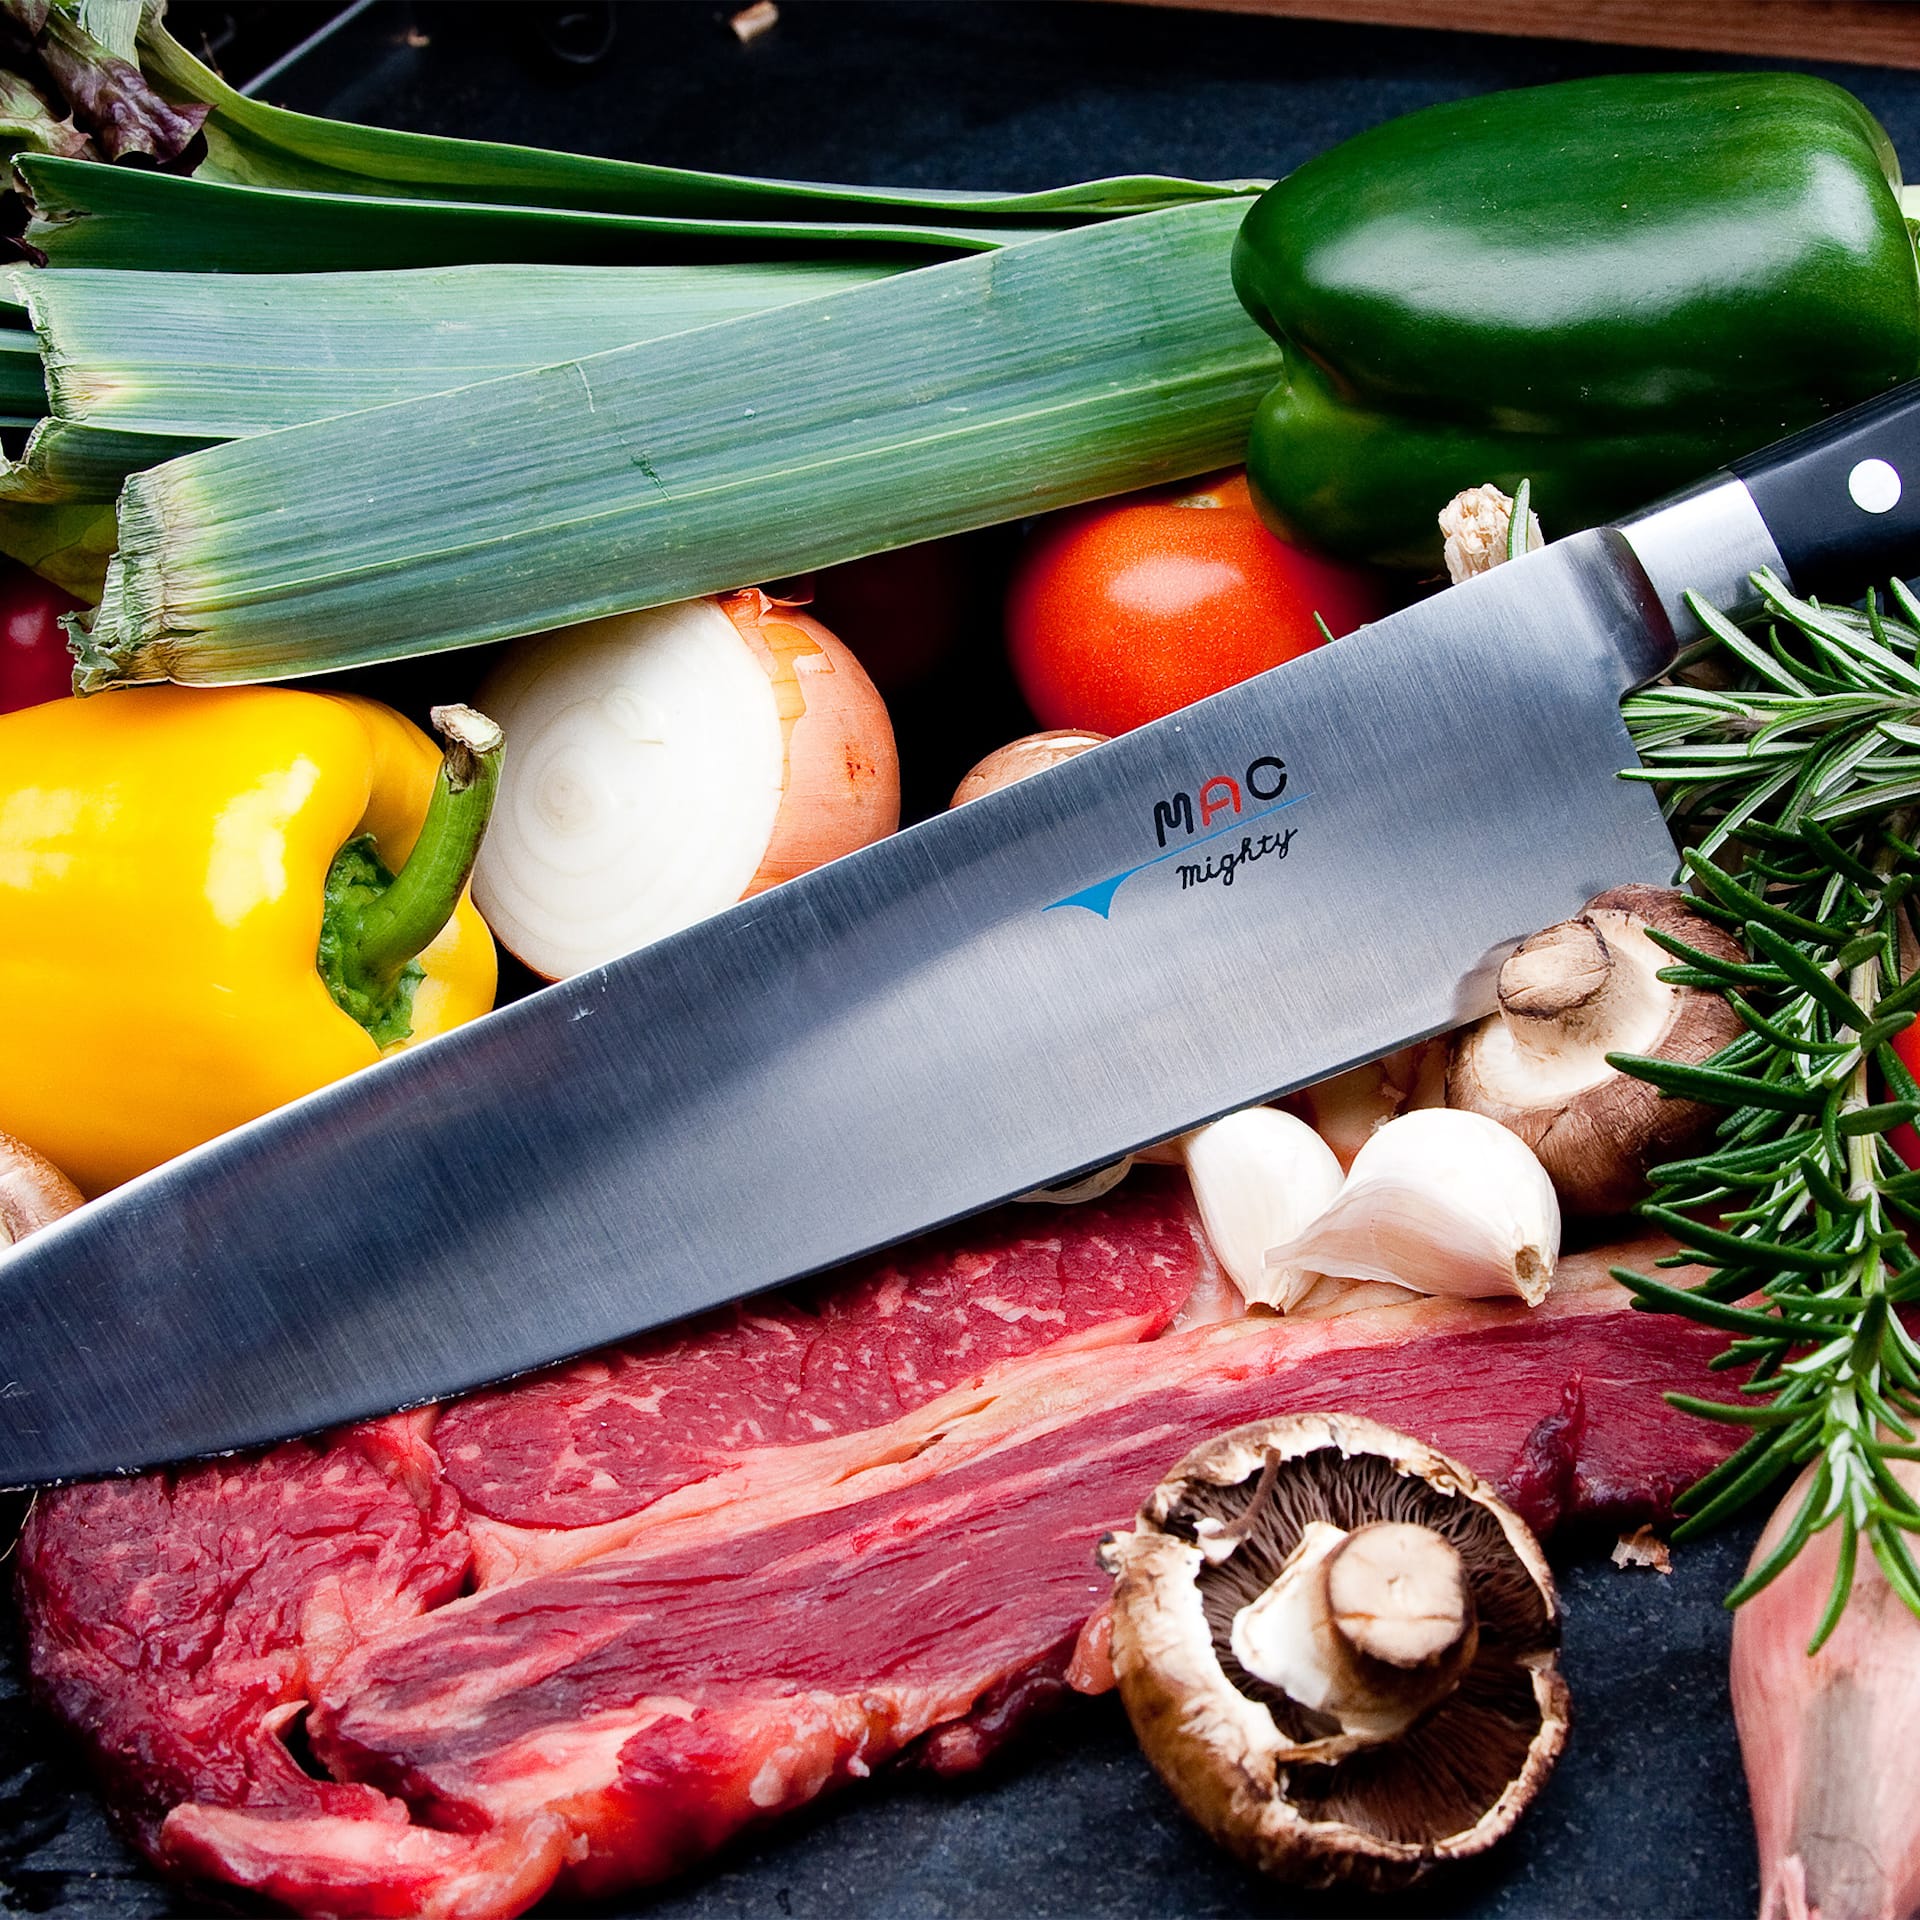 Mighty - Chef's knife, 22 cm - MAC - NO GA